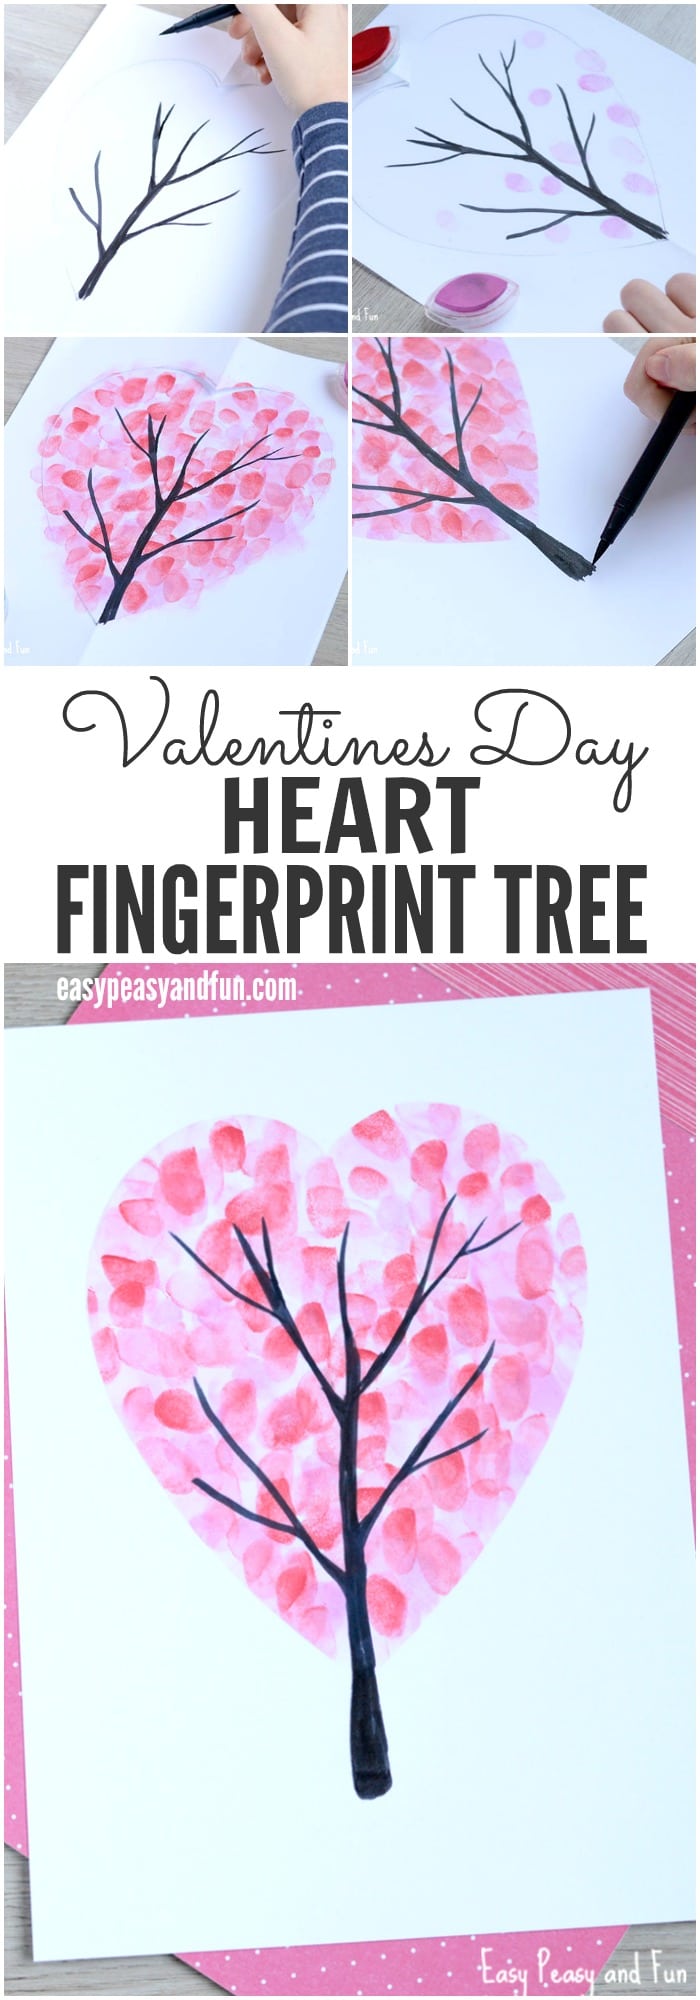 Valentines Day Heart Fingerprint Tree Craft